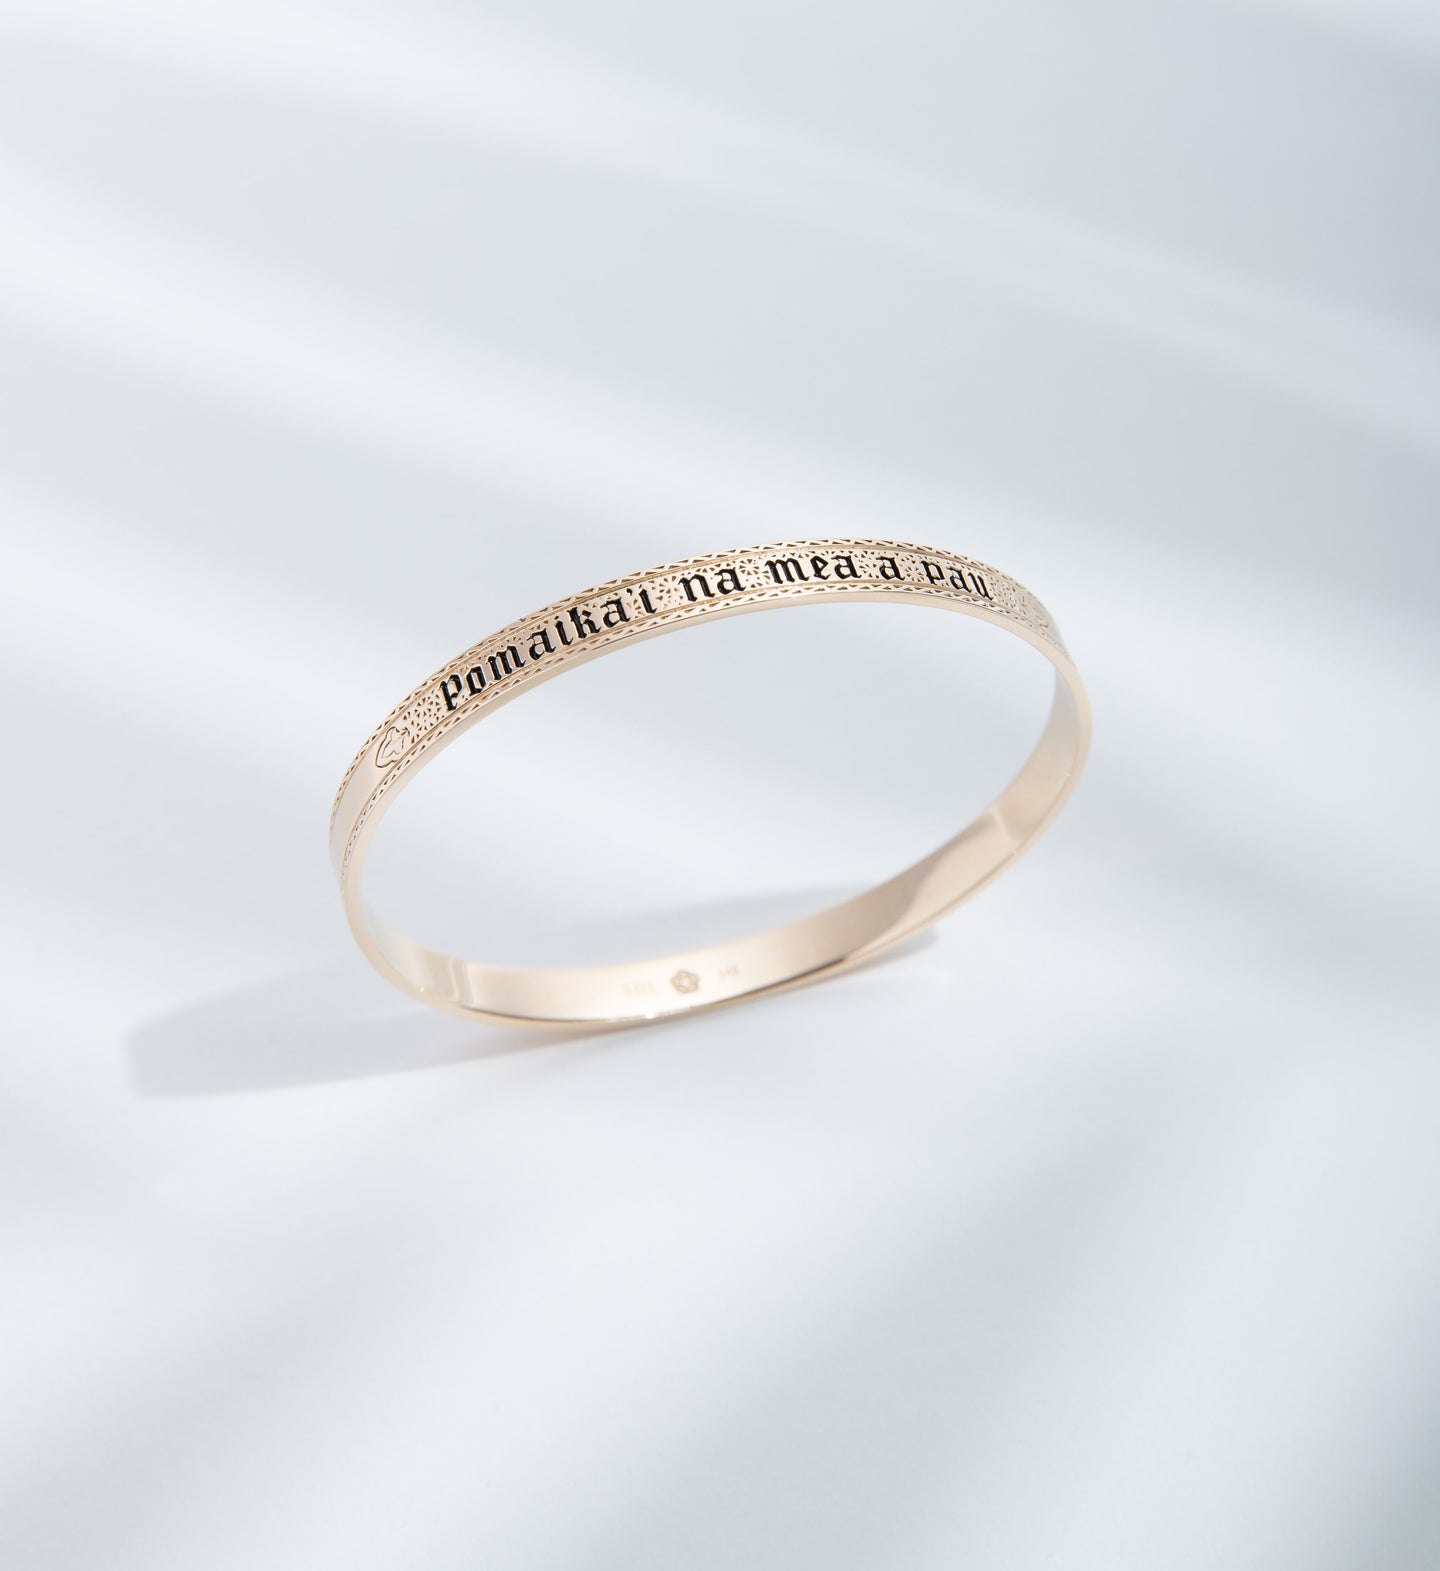 HIE 1881 Fleur De Lis gold bangle bracelet with engraving, standing upright